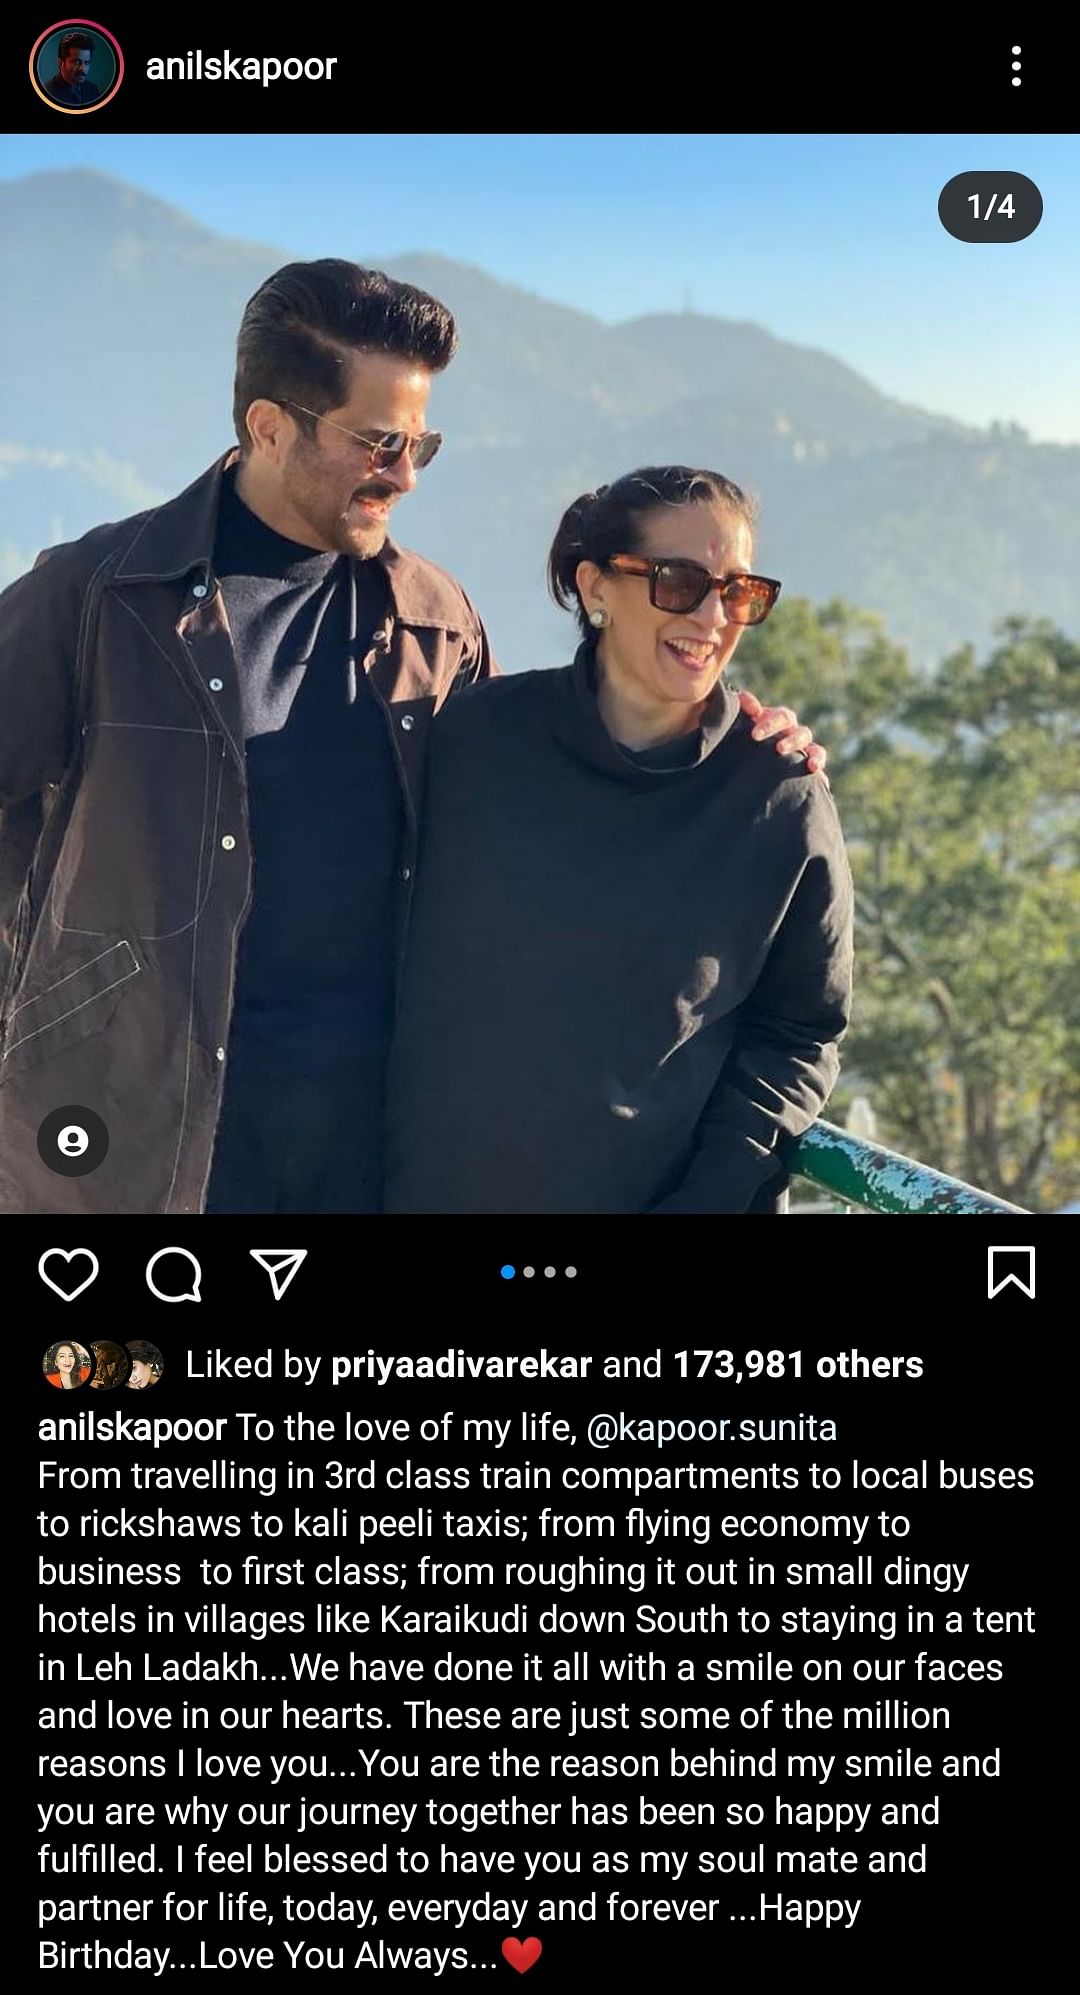 Anil Kapoor wrote a heartfelt caption highlighting the couple's journey